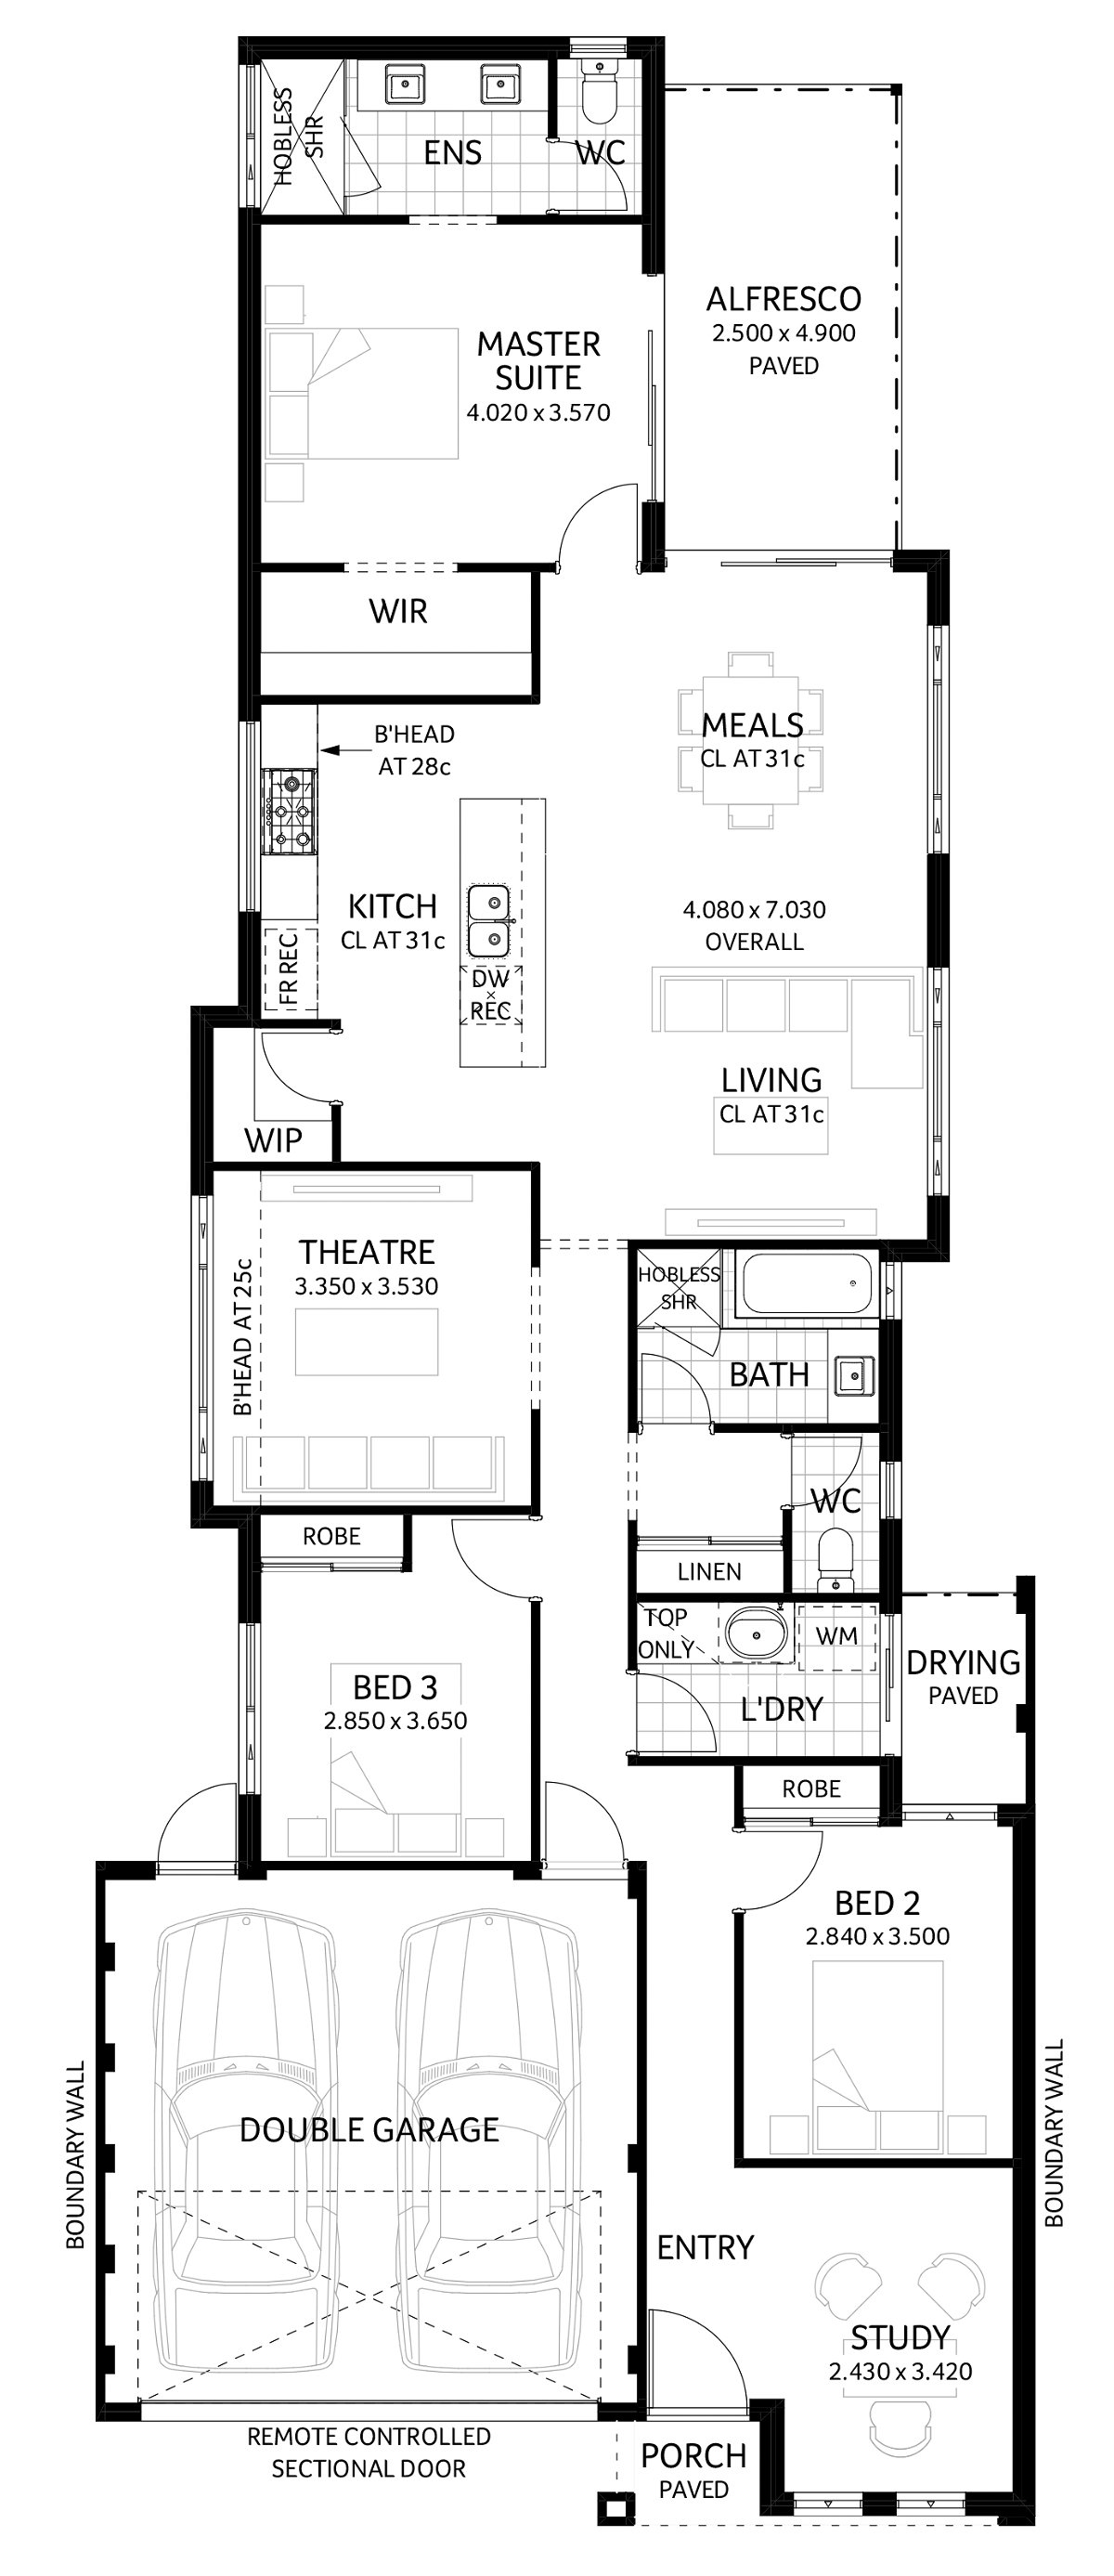 Plunkett Homes - York | Federation - Floorplan - York Luxe Federation Marketing Plan Croppedjpg